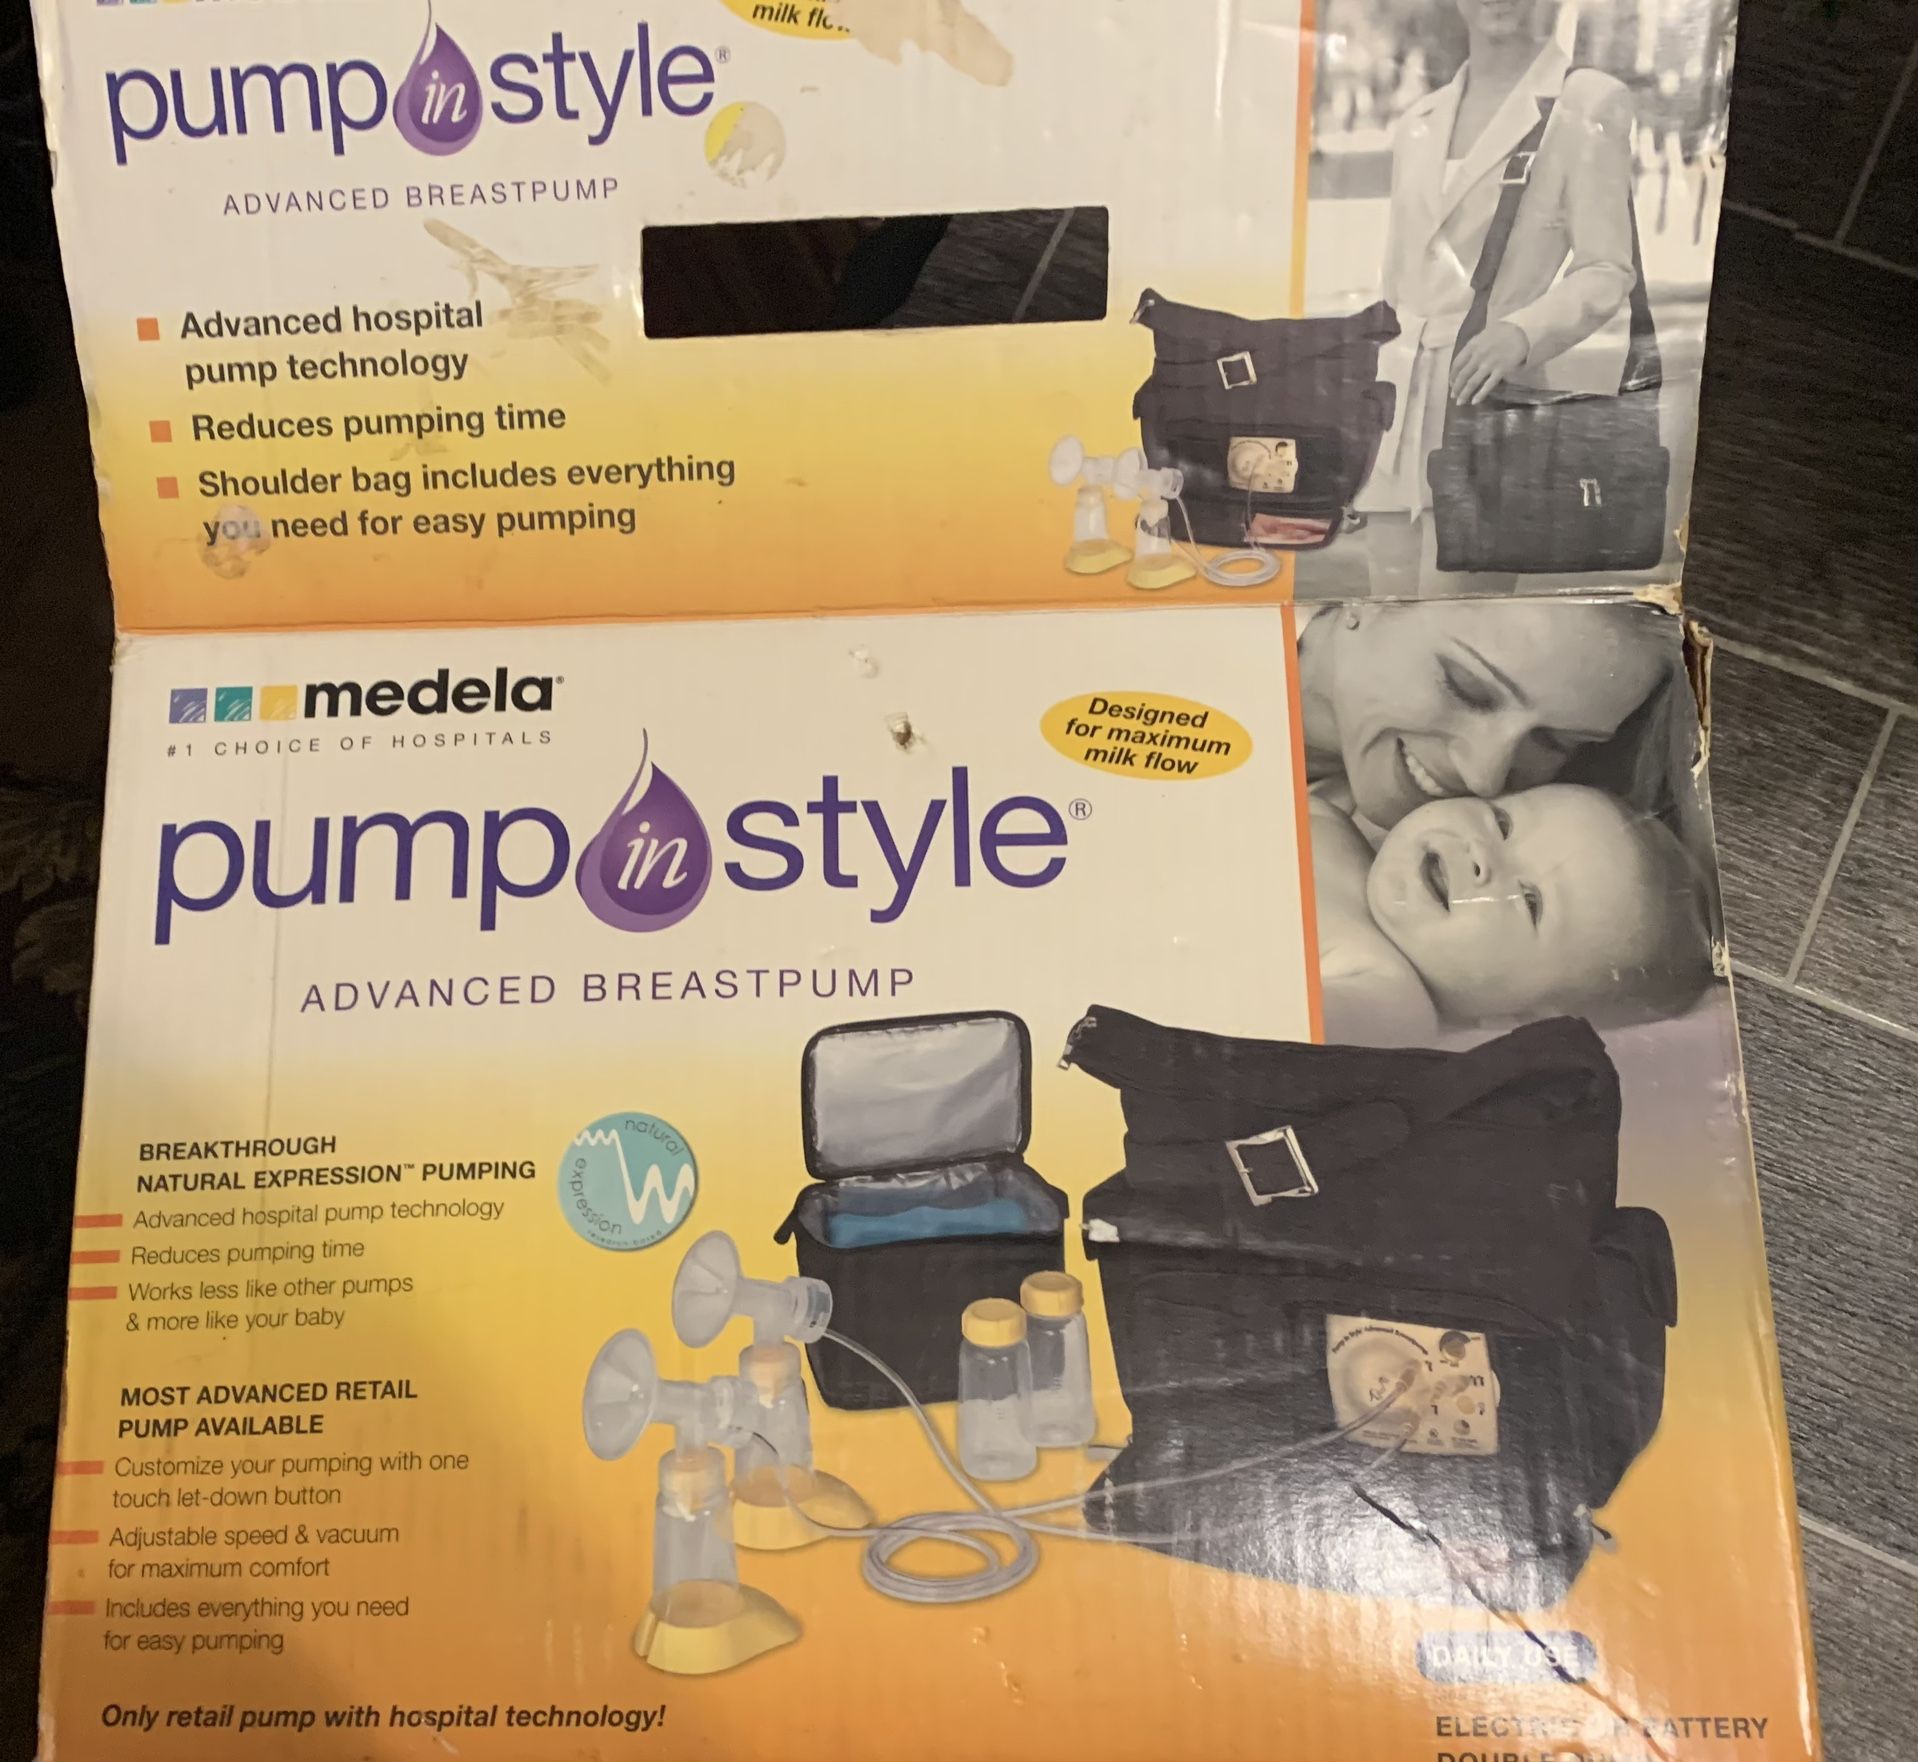 Pump In Style Advanced Breast pump